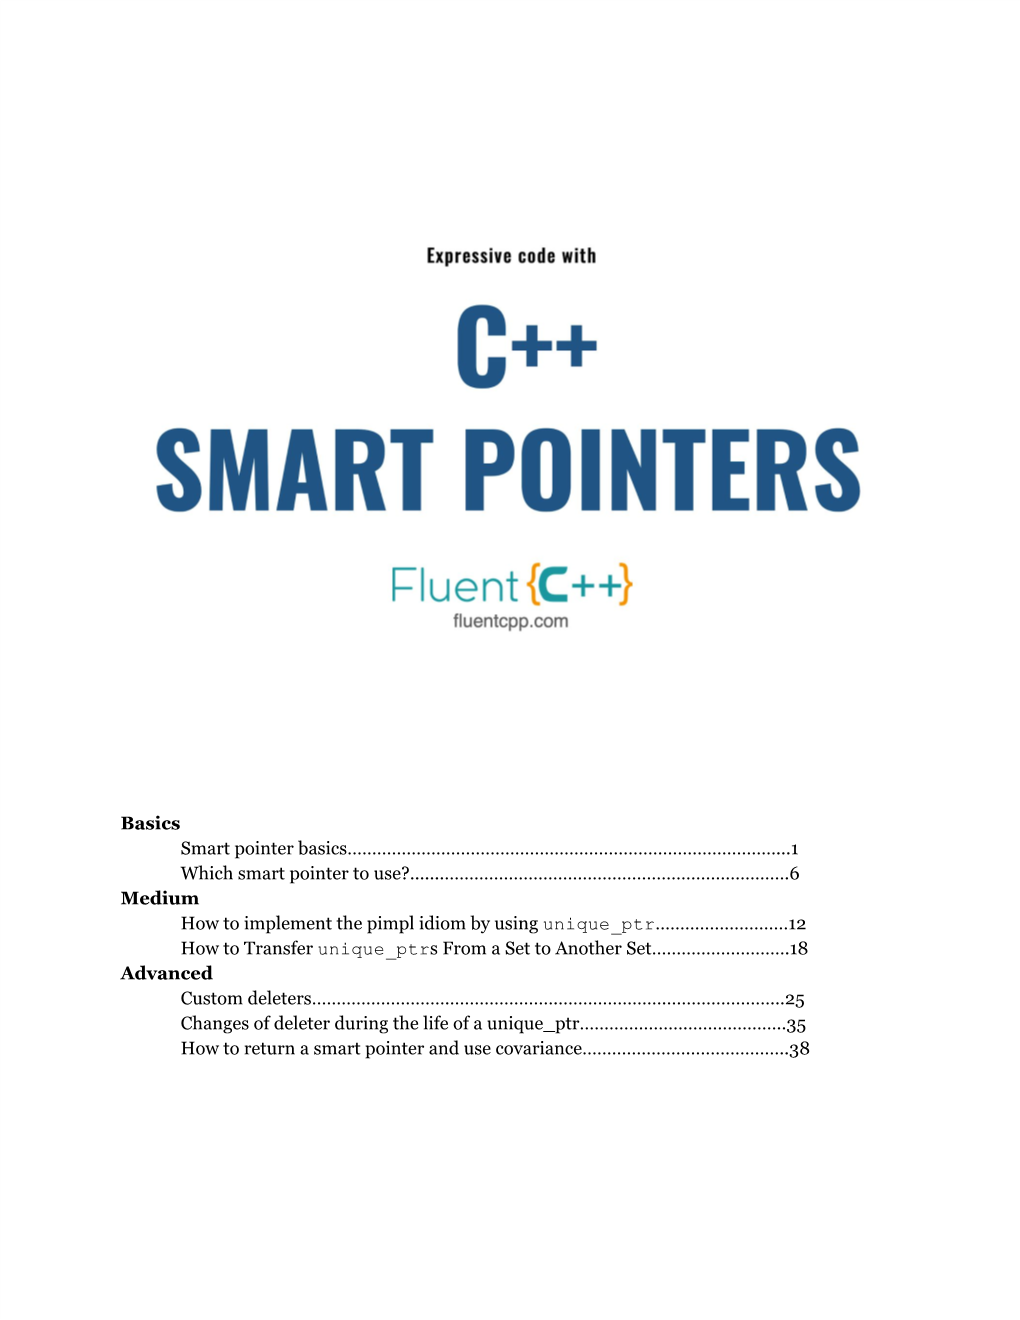 Basics Smart Pointer Basics……………………………………………………………………………...1 Which Smart Pointer to Use?